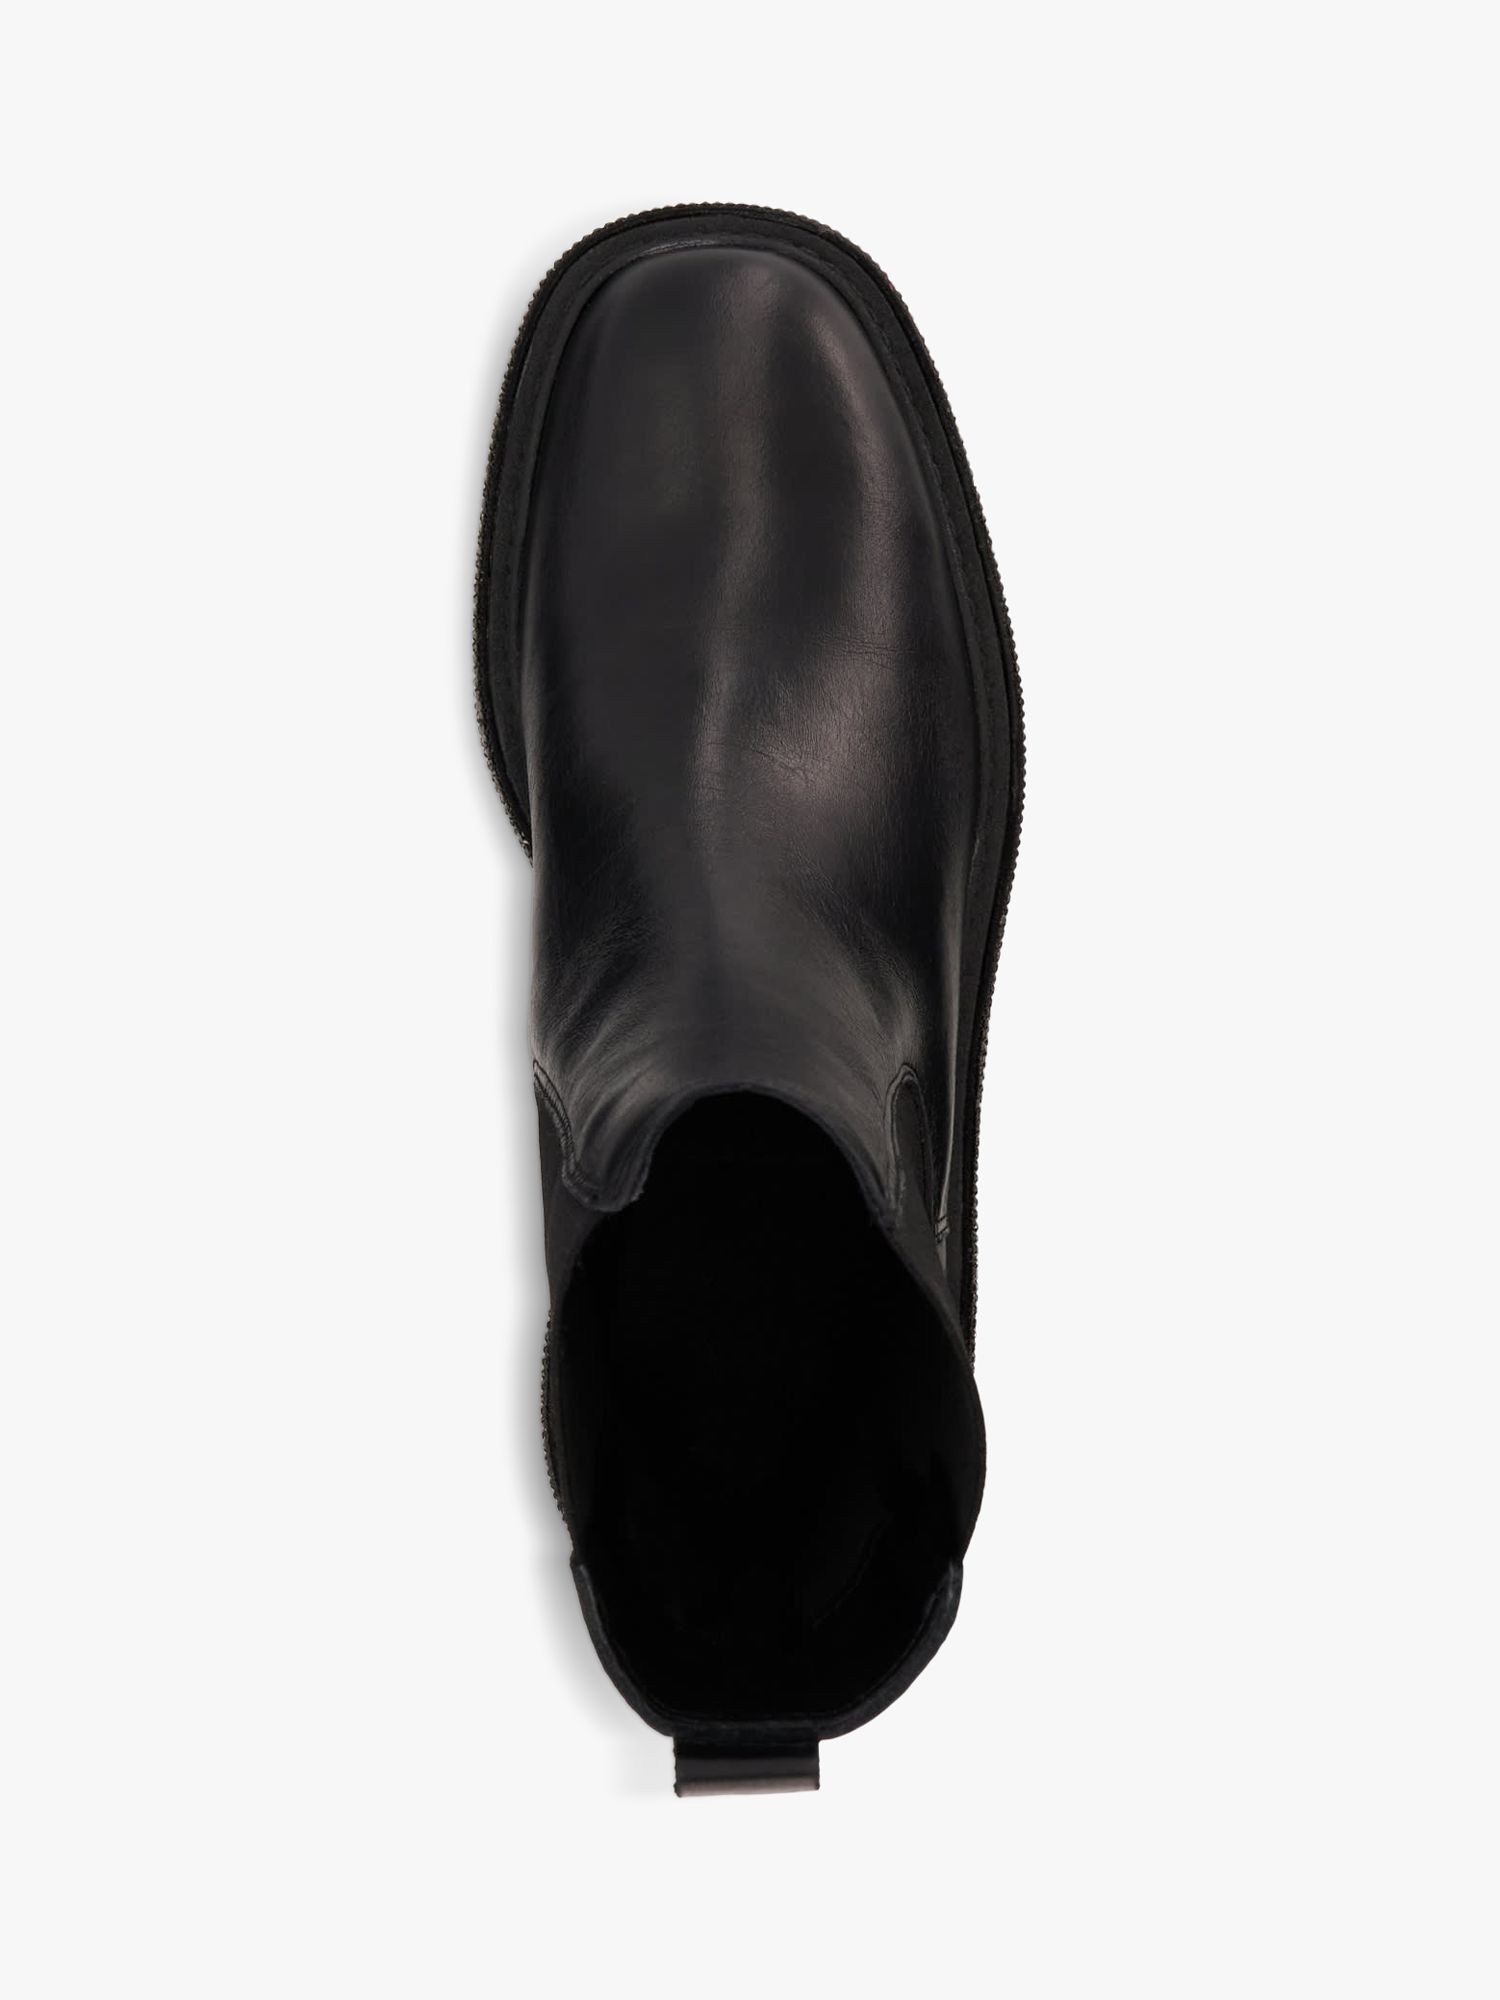 Dune Panics Leather Diamante Embellished Chelsea Boots, Black, 3